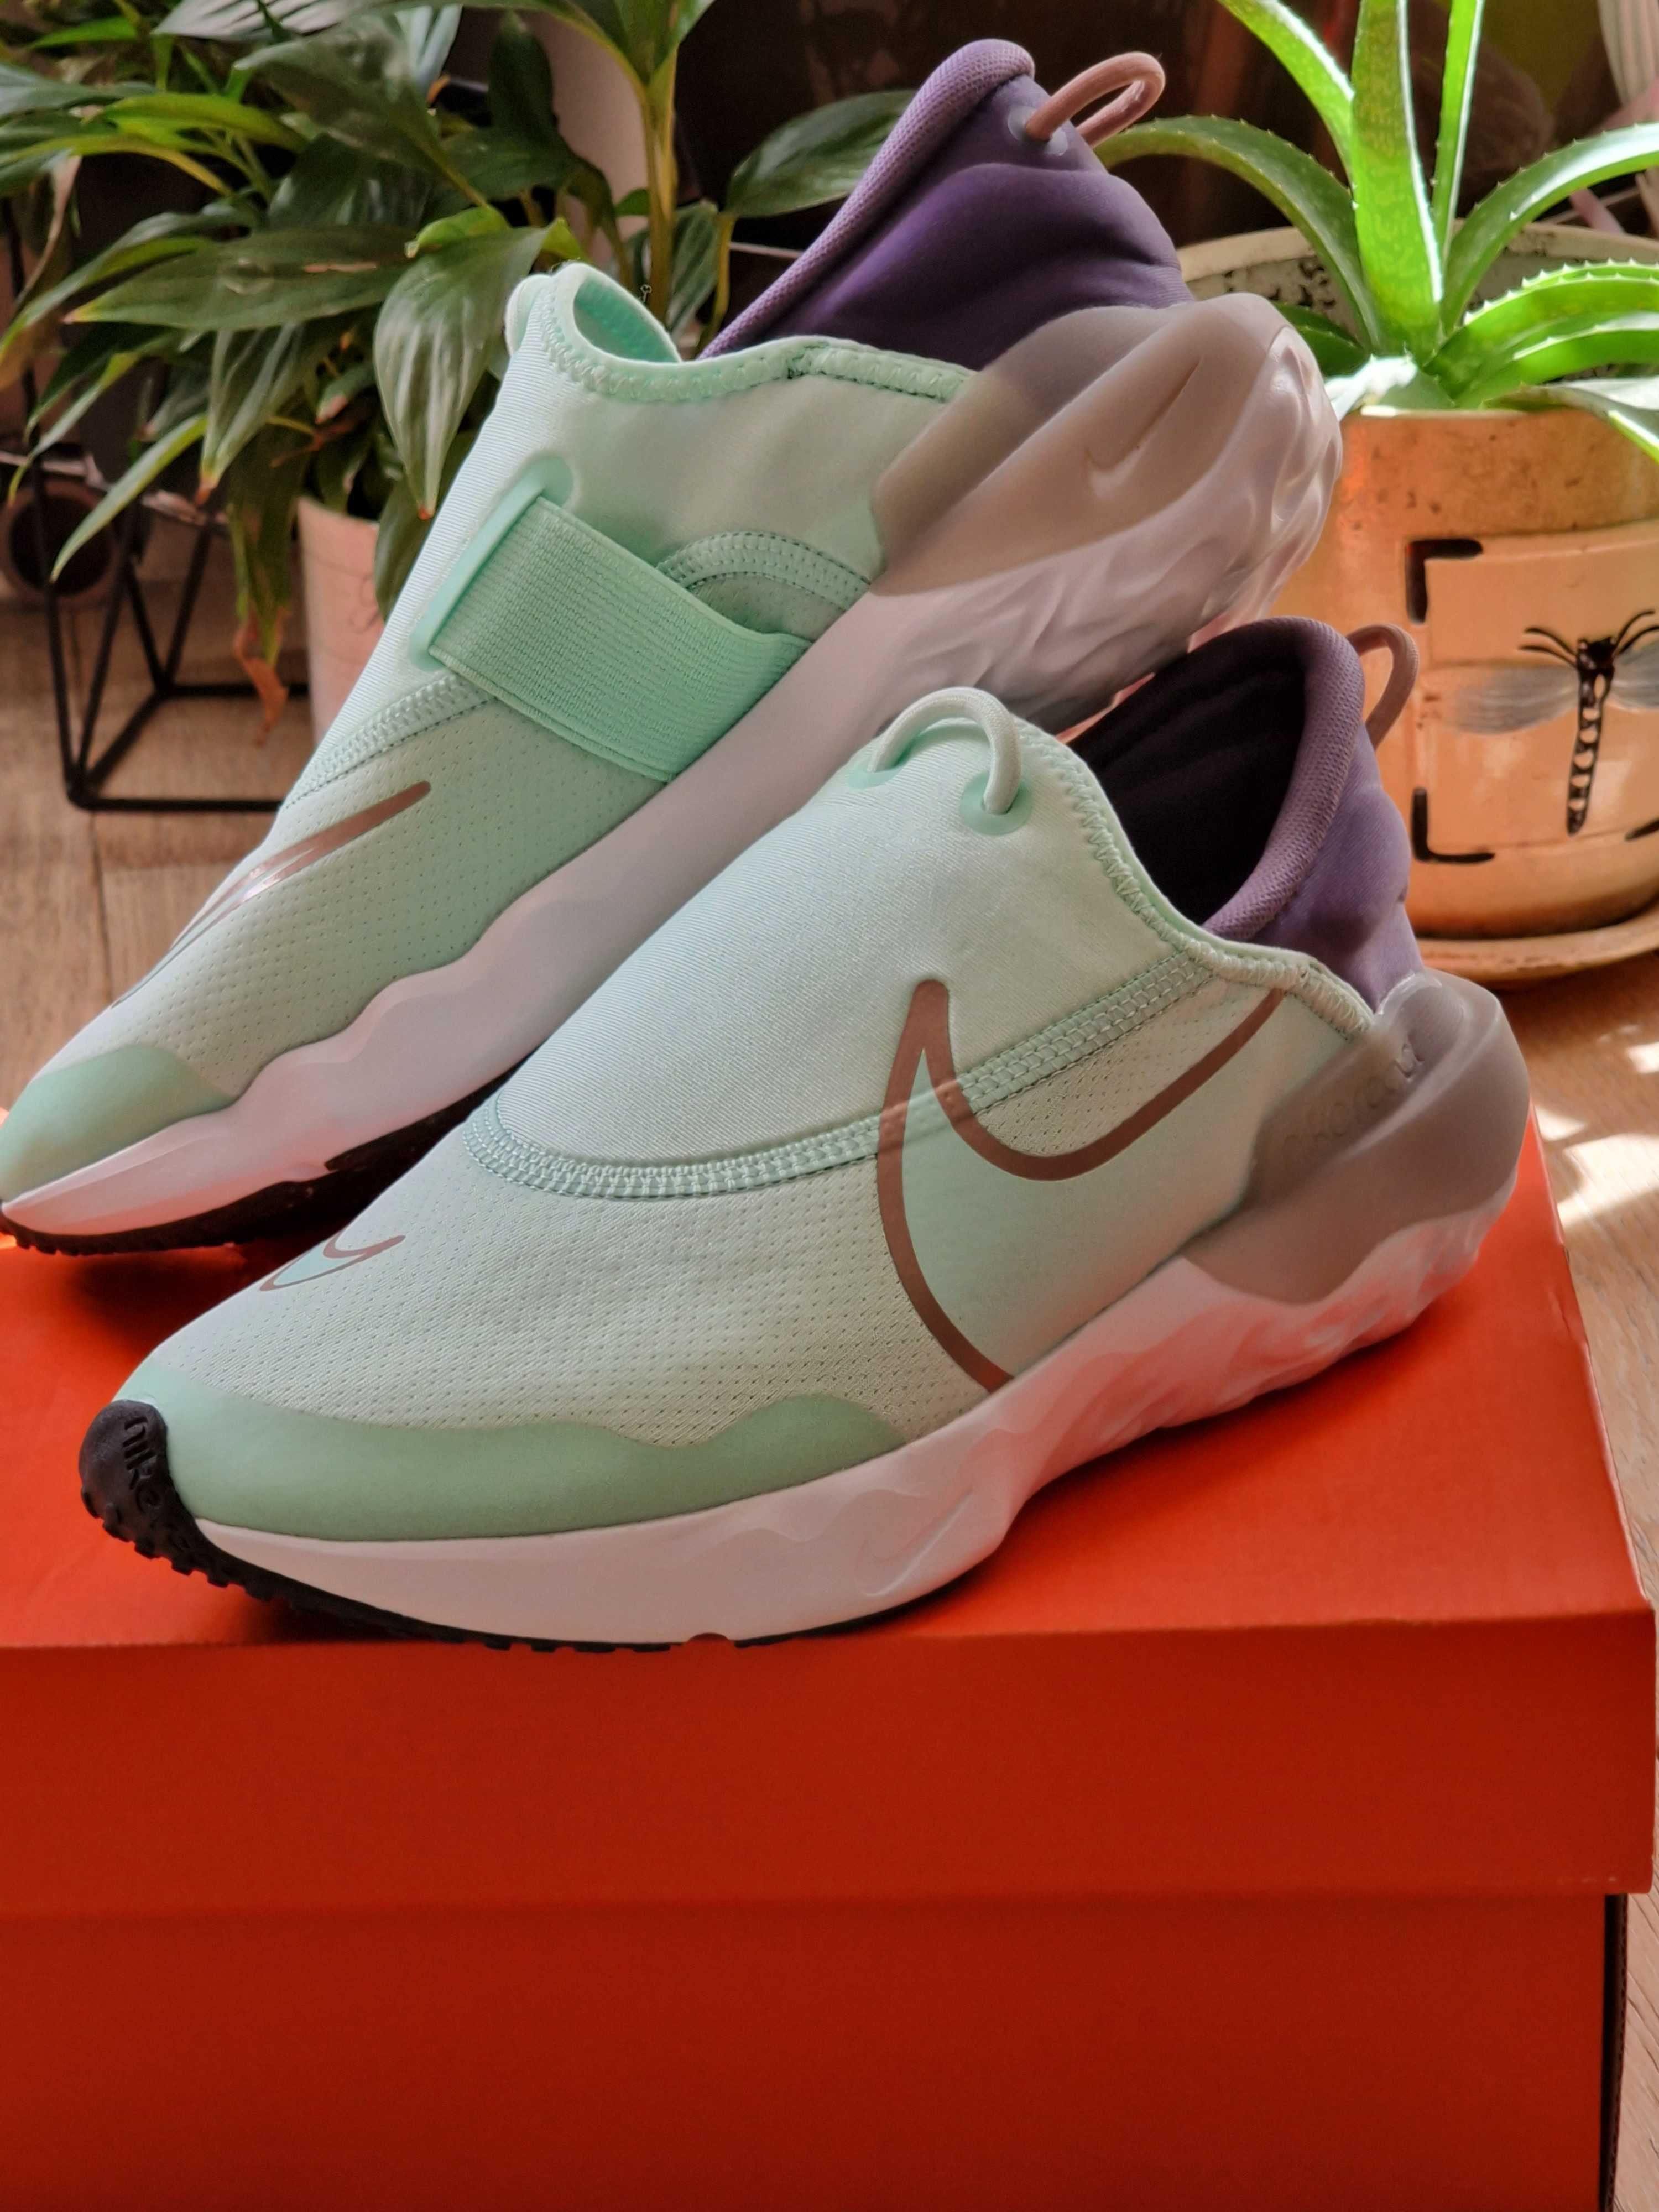 Оригинални маратонки Nike React Flow - Running Shoes  р-р 37,5